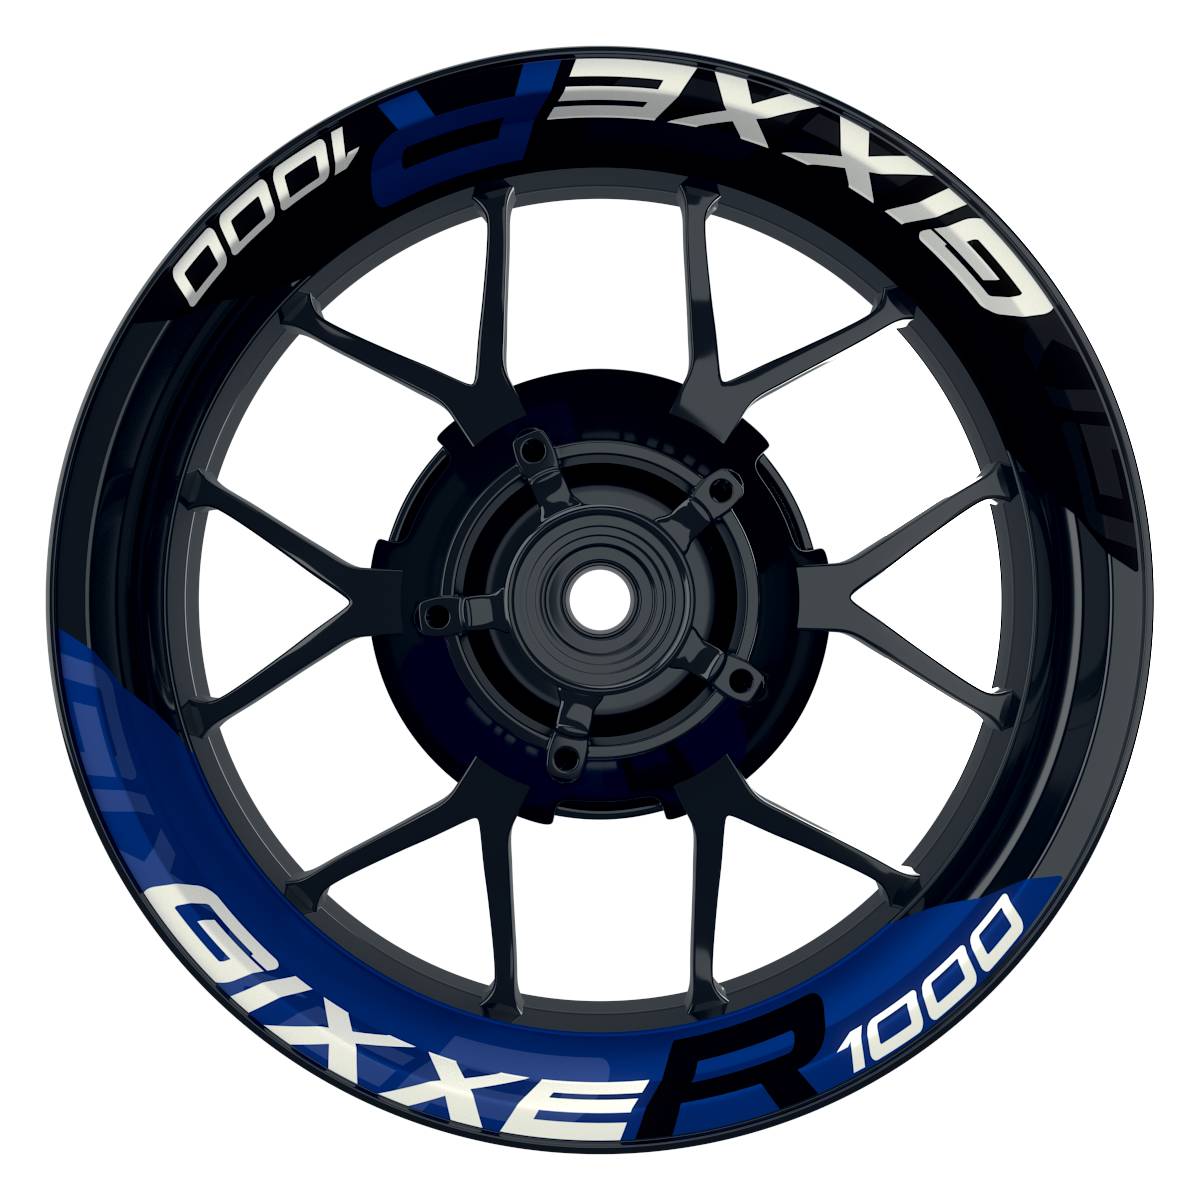 Wheelsticker Felgenaufkleber GIXXER1000 halb halb V2 schwarz blau Frontansicht